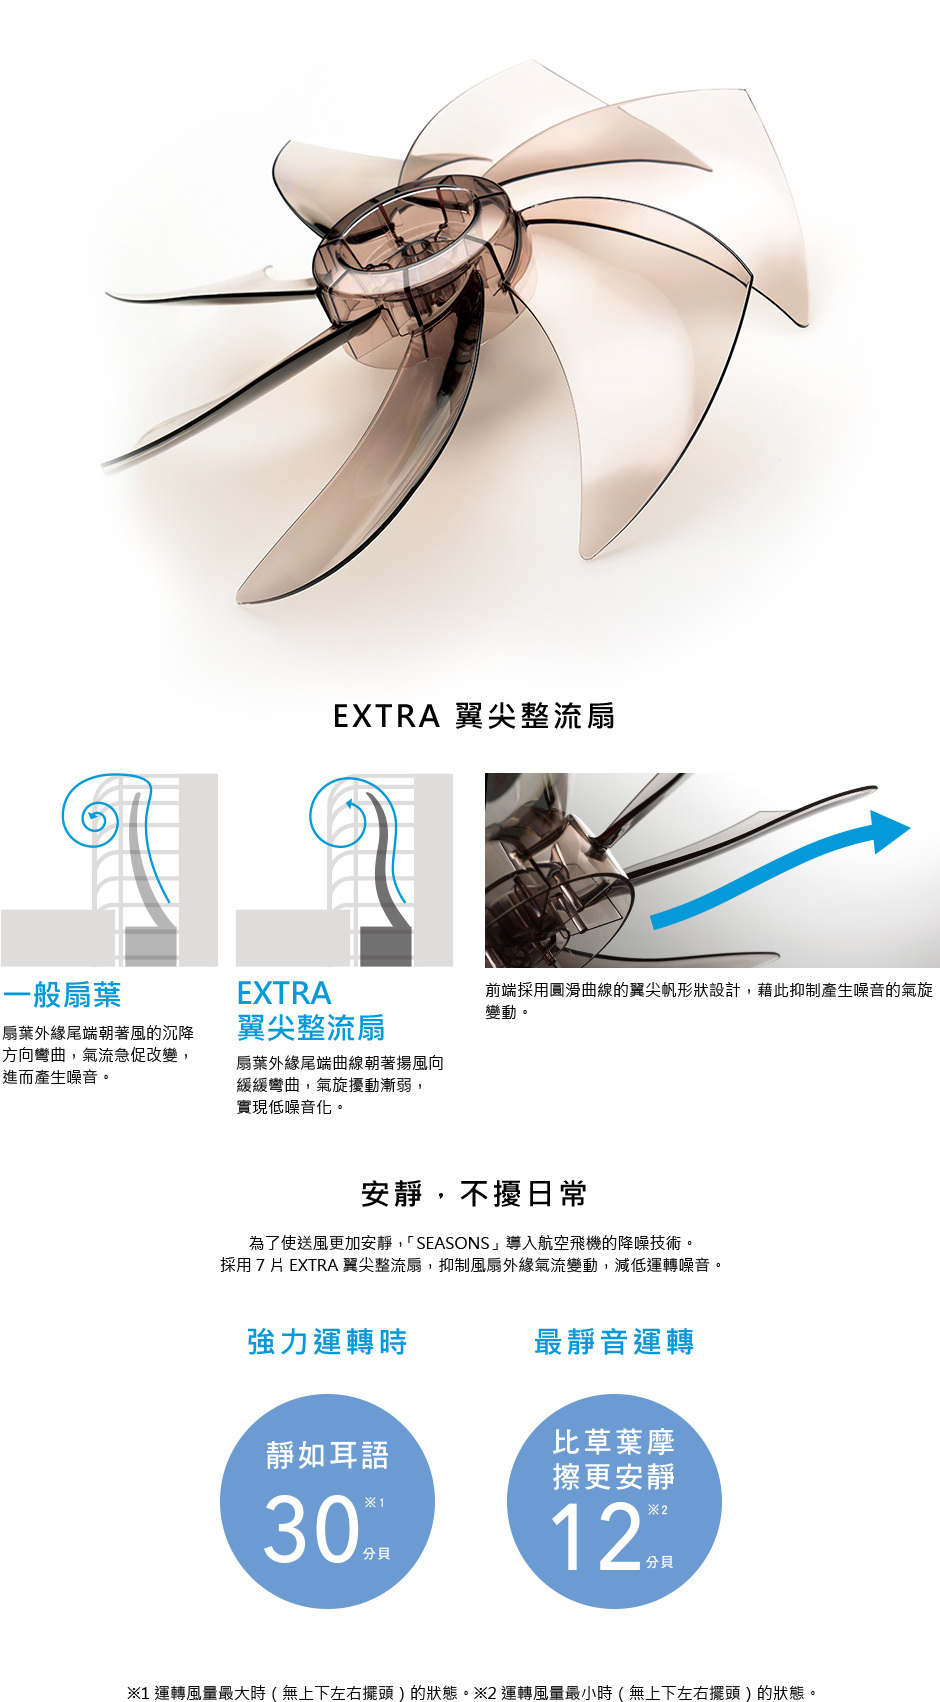 極靜風扇首選 MITSUBISHI 三菱電機 SEASONS 舒適新風尚